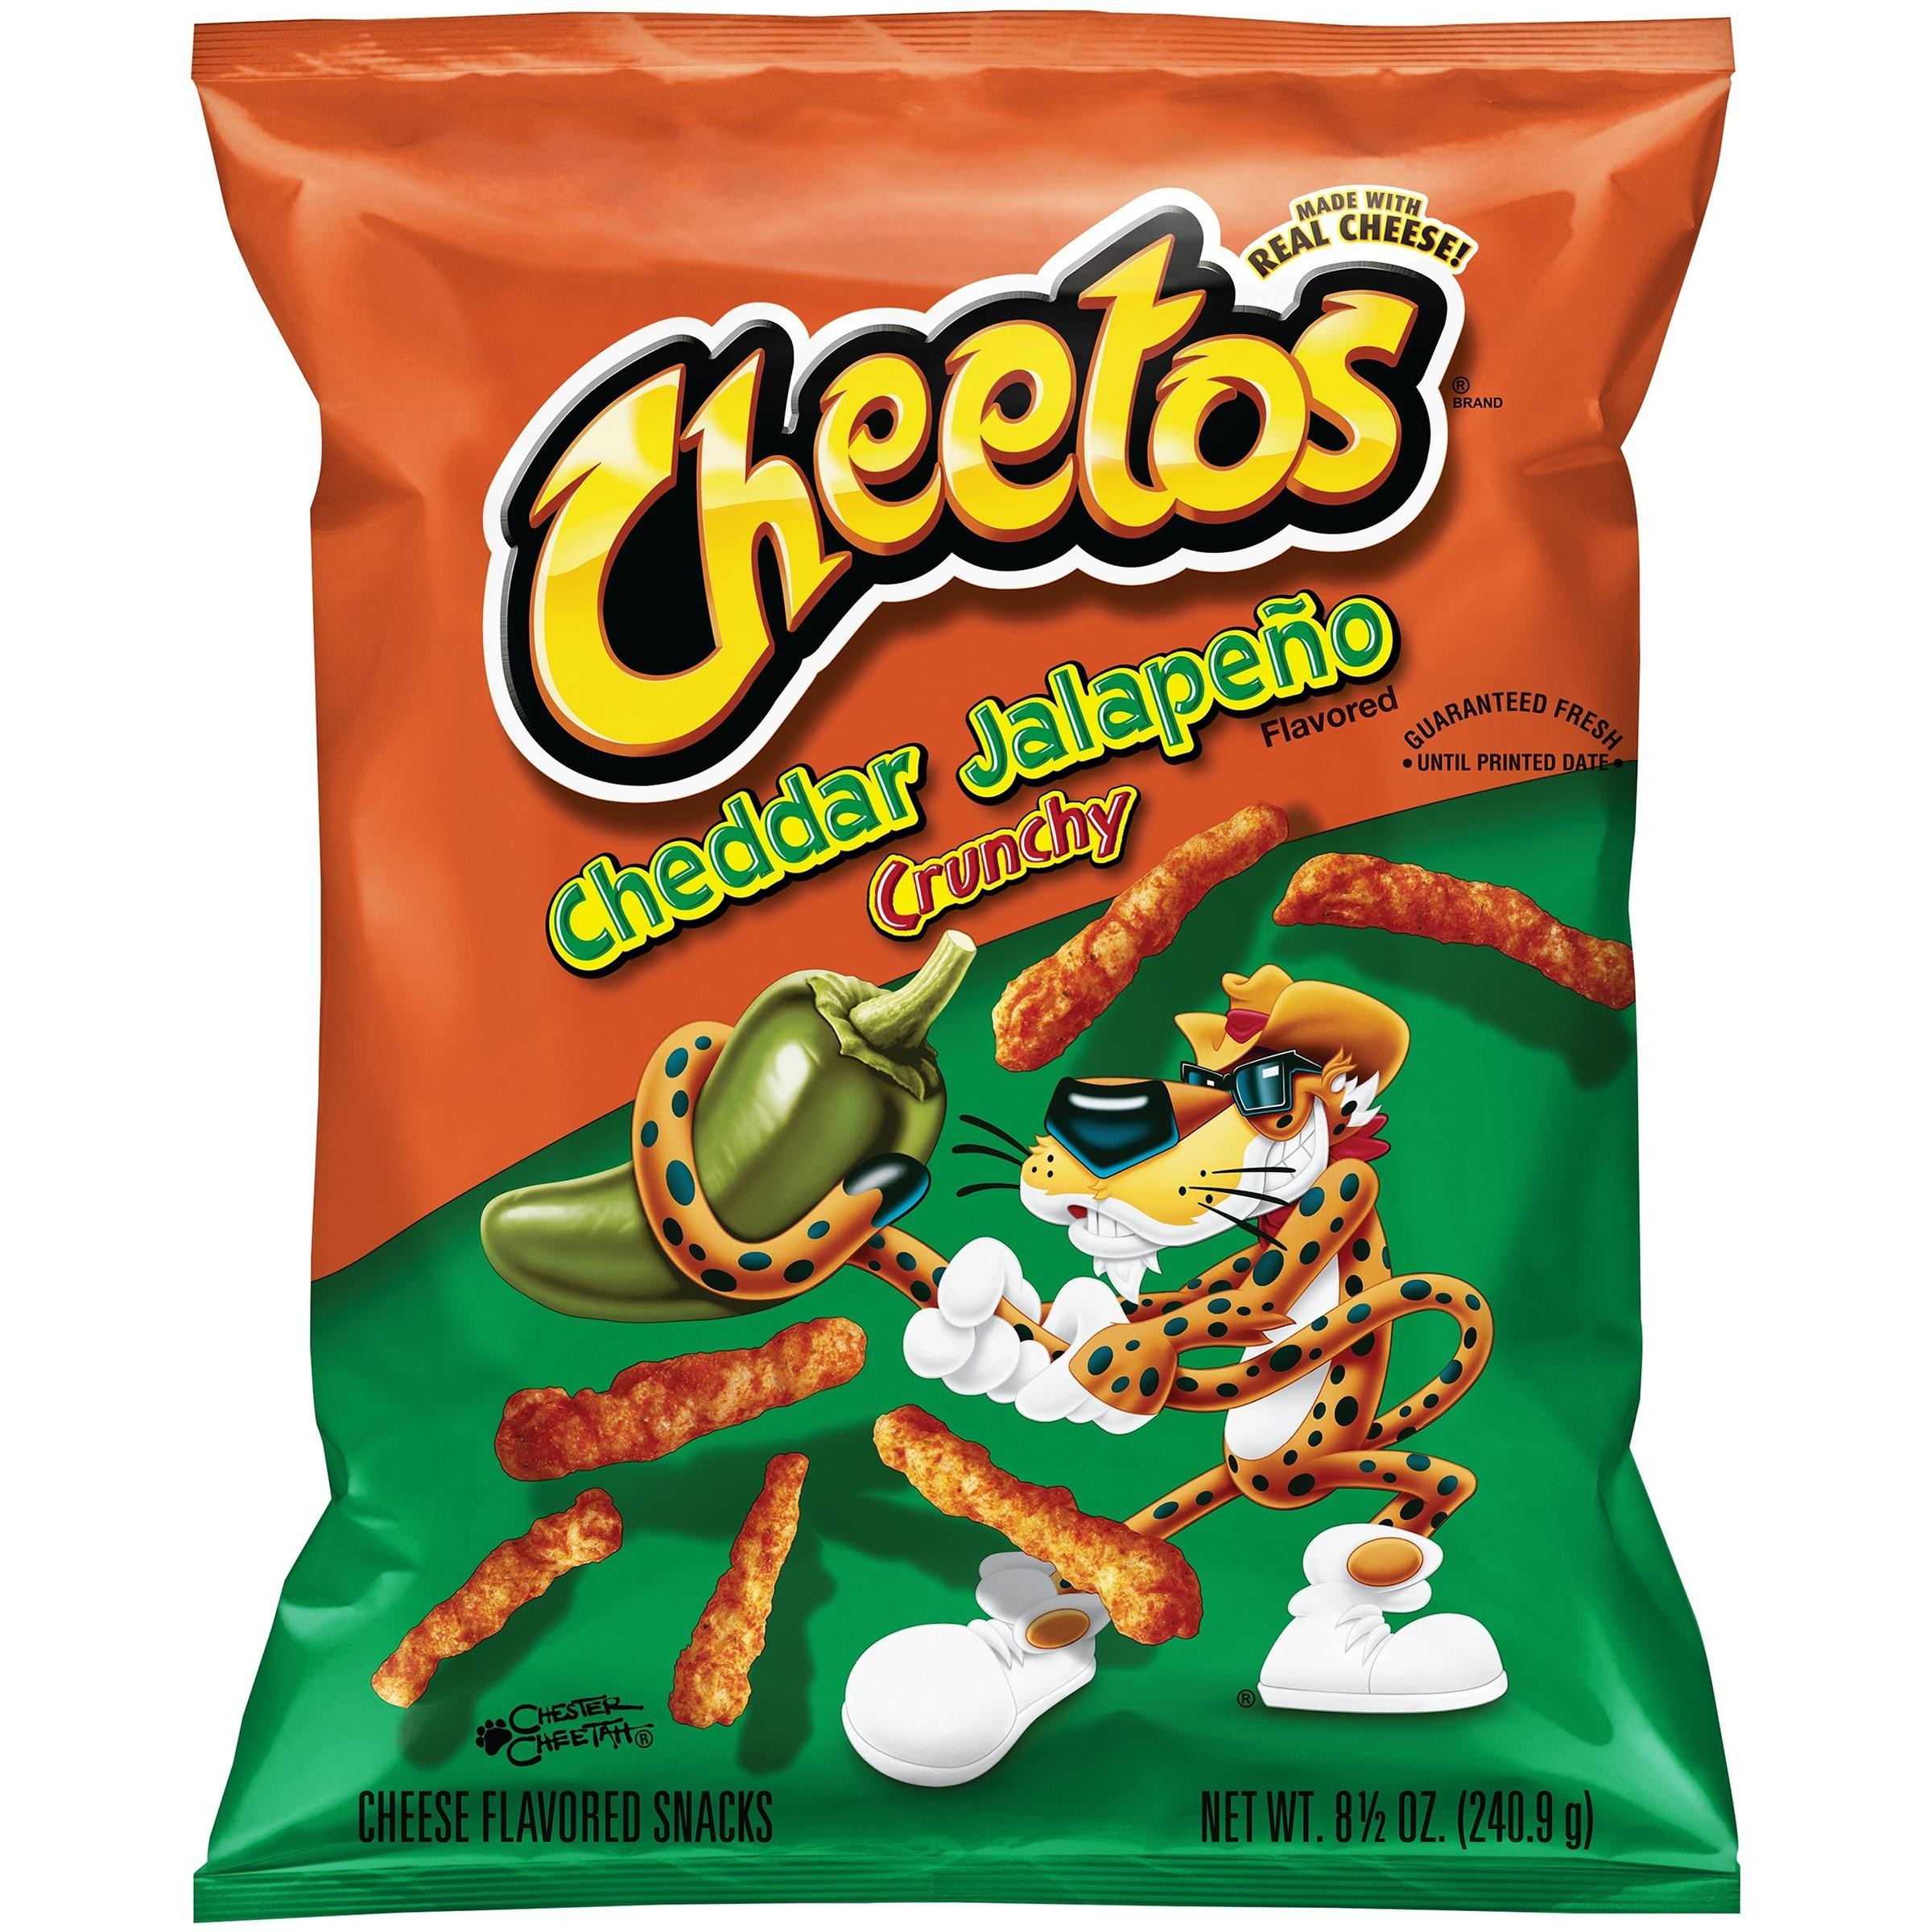 Cheetos Jalapeno Cheddar LG